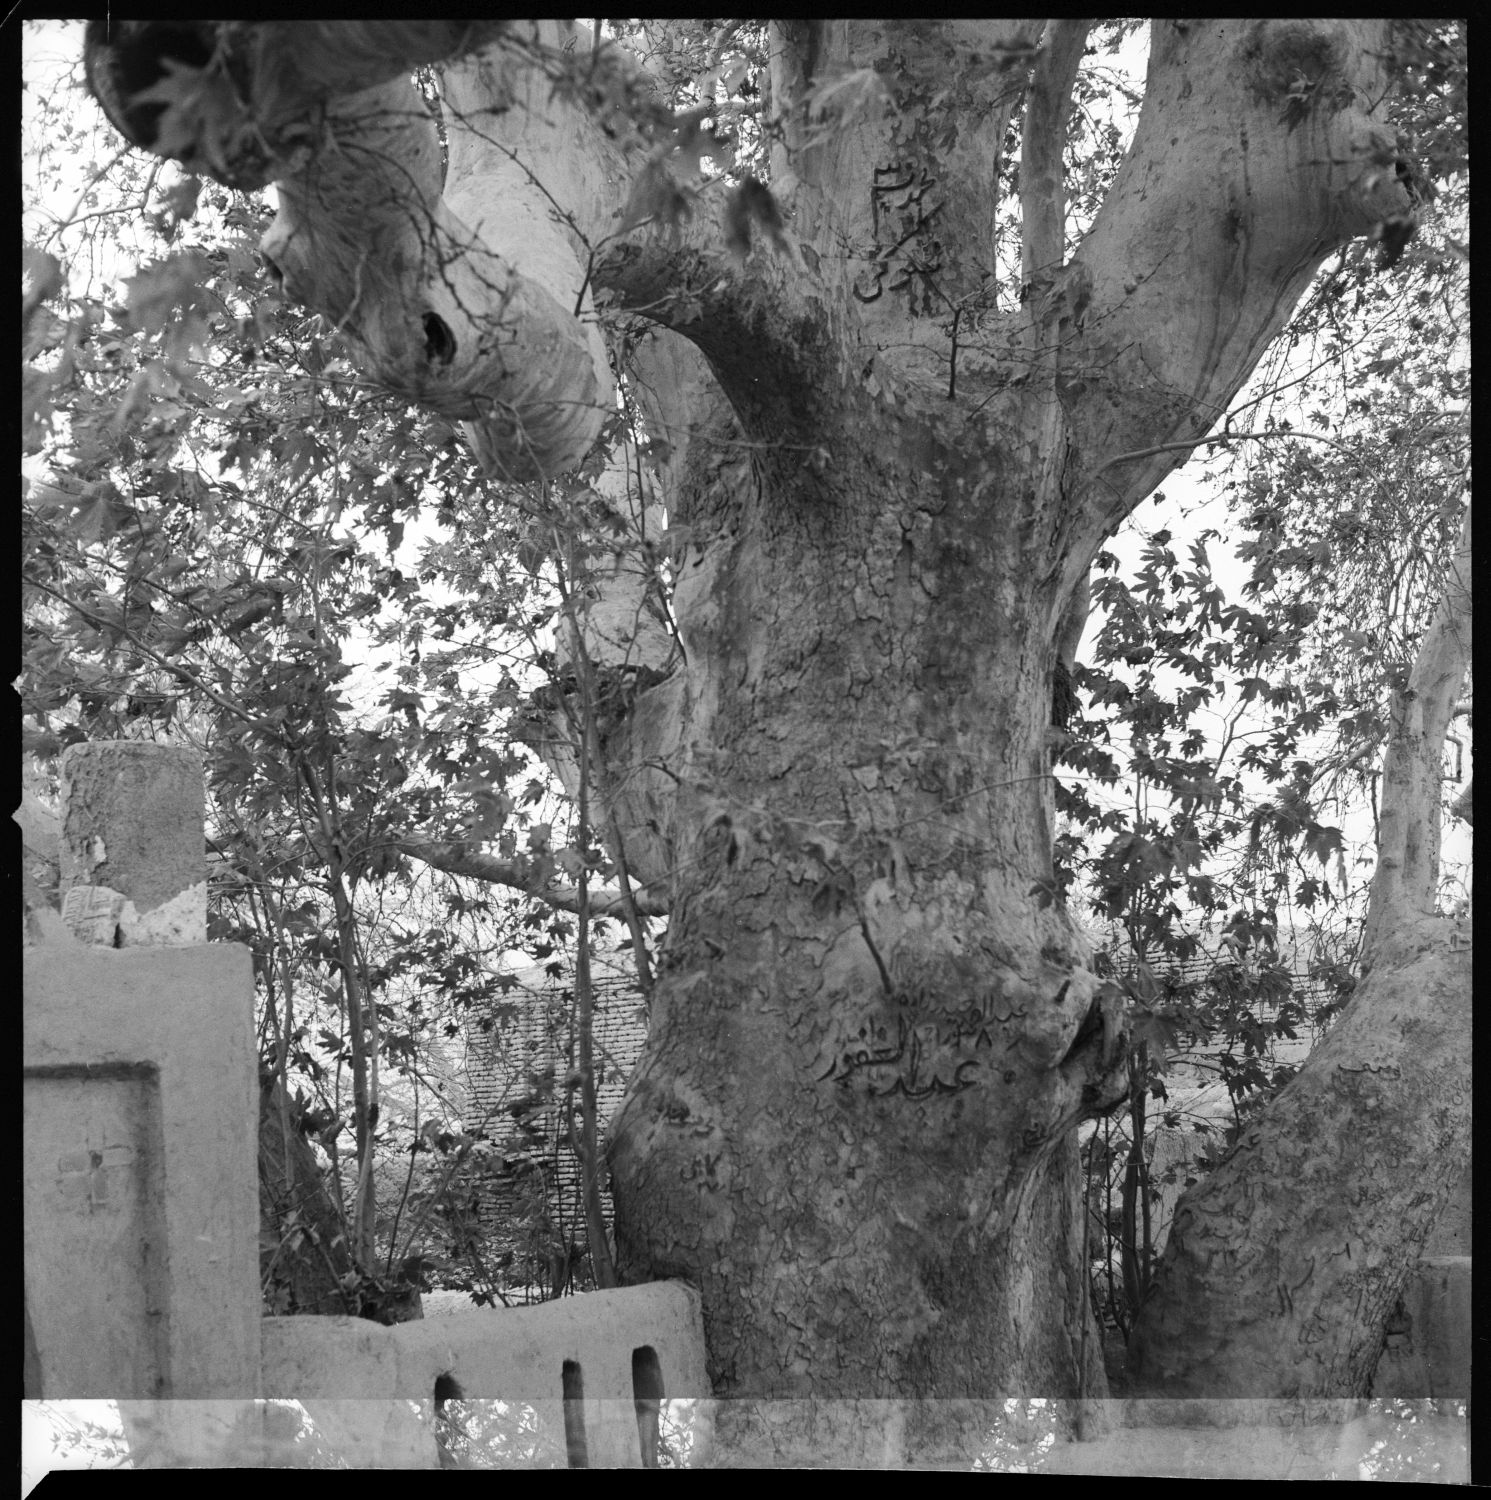 Khwajah Aksha Wali Ziyarat - View of a trunk of large tree with graffiti near ruins.